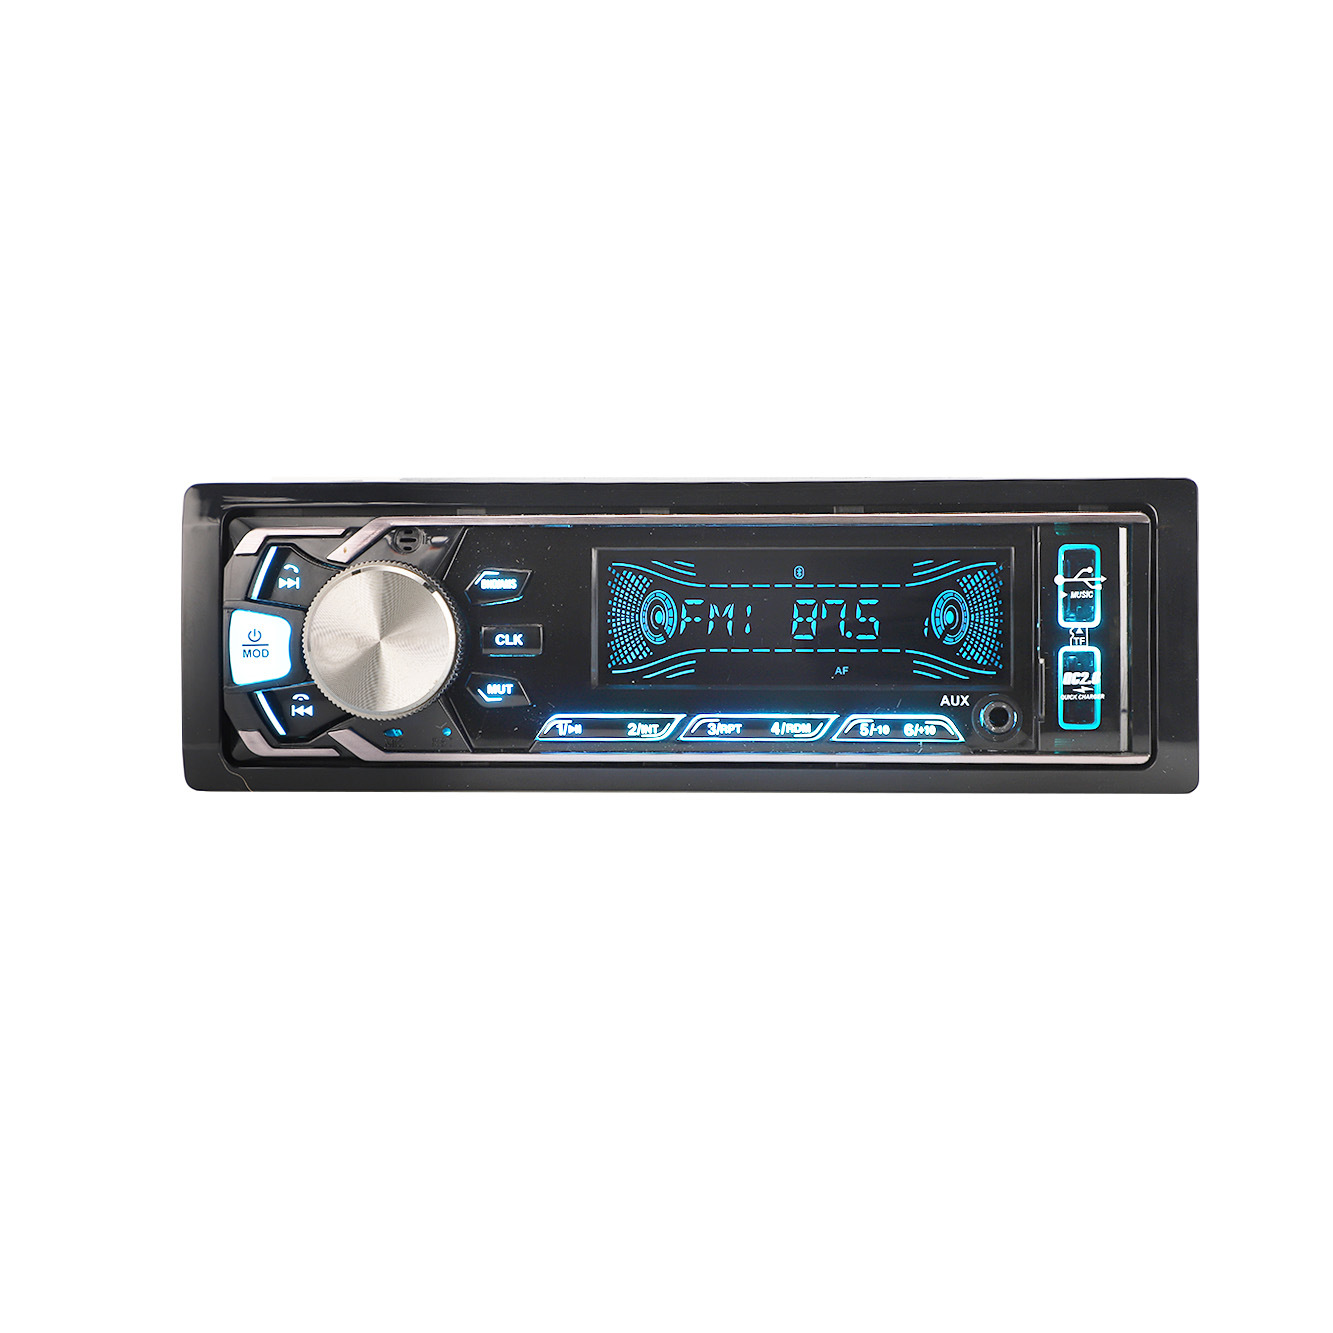 MP3-Player, Autoladegerät, MP3-Player, Einzel-DIN-Auto-MP3-Player mit festem Panel